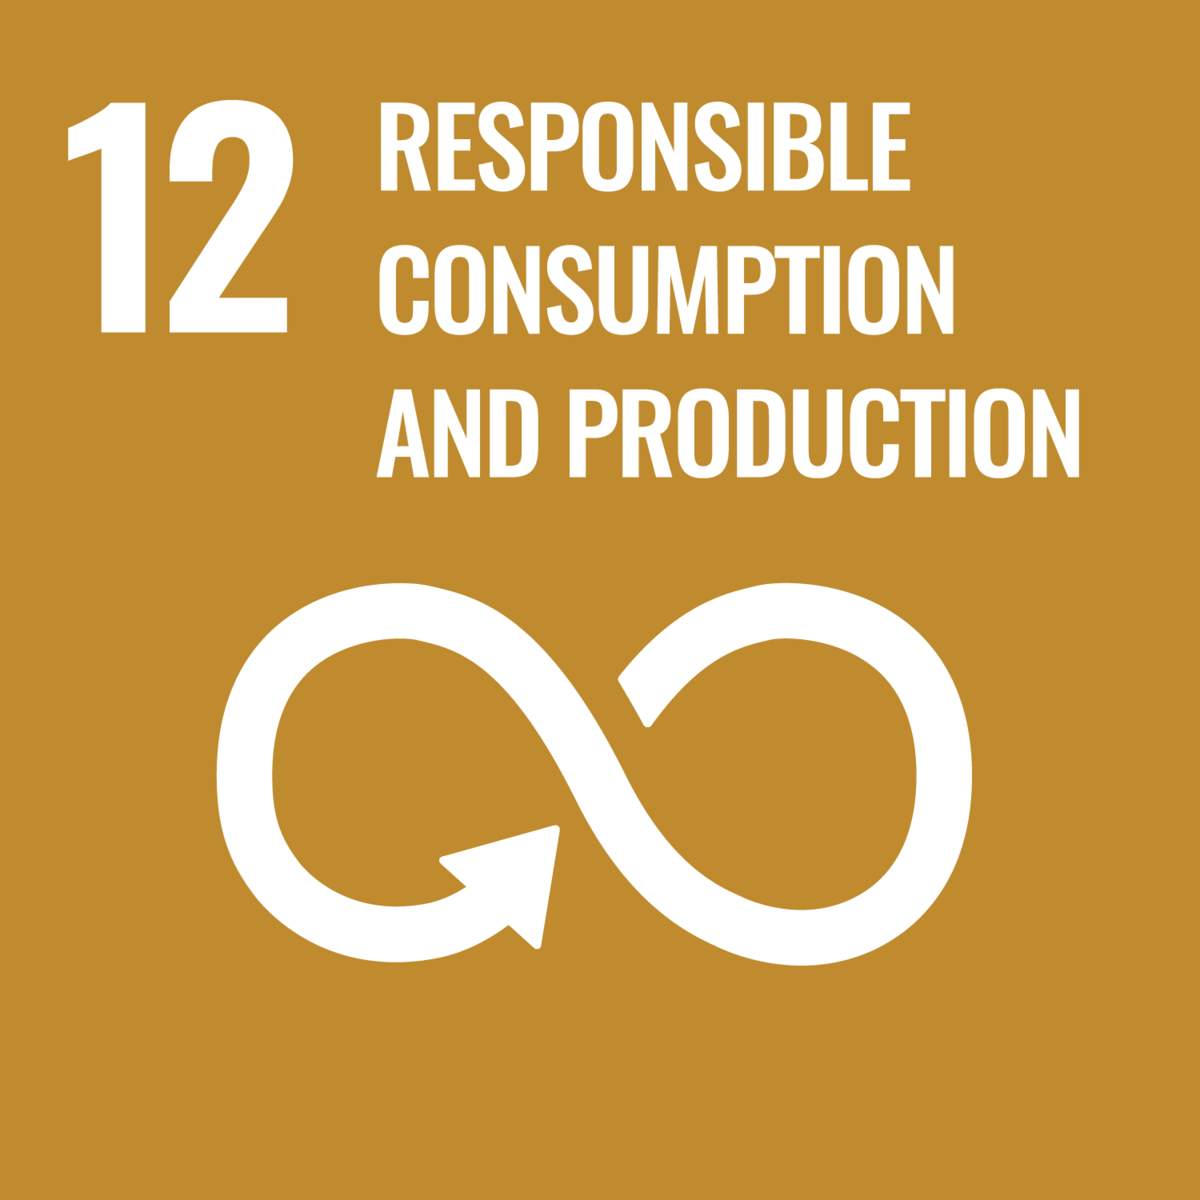 Ms von Reden, does SDG12 mean renouncing consumption?